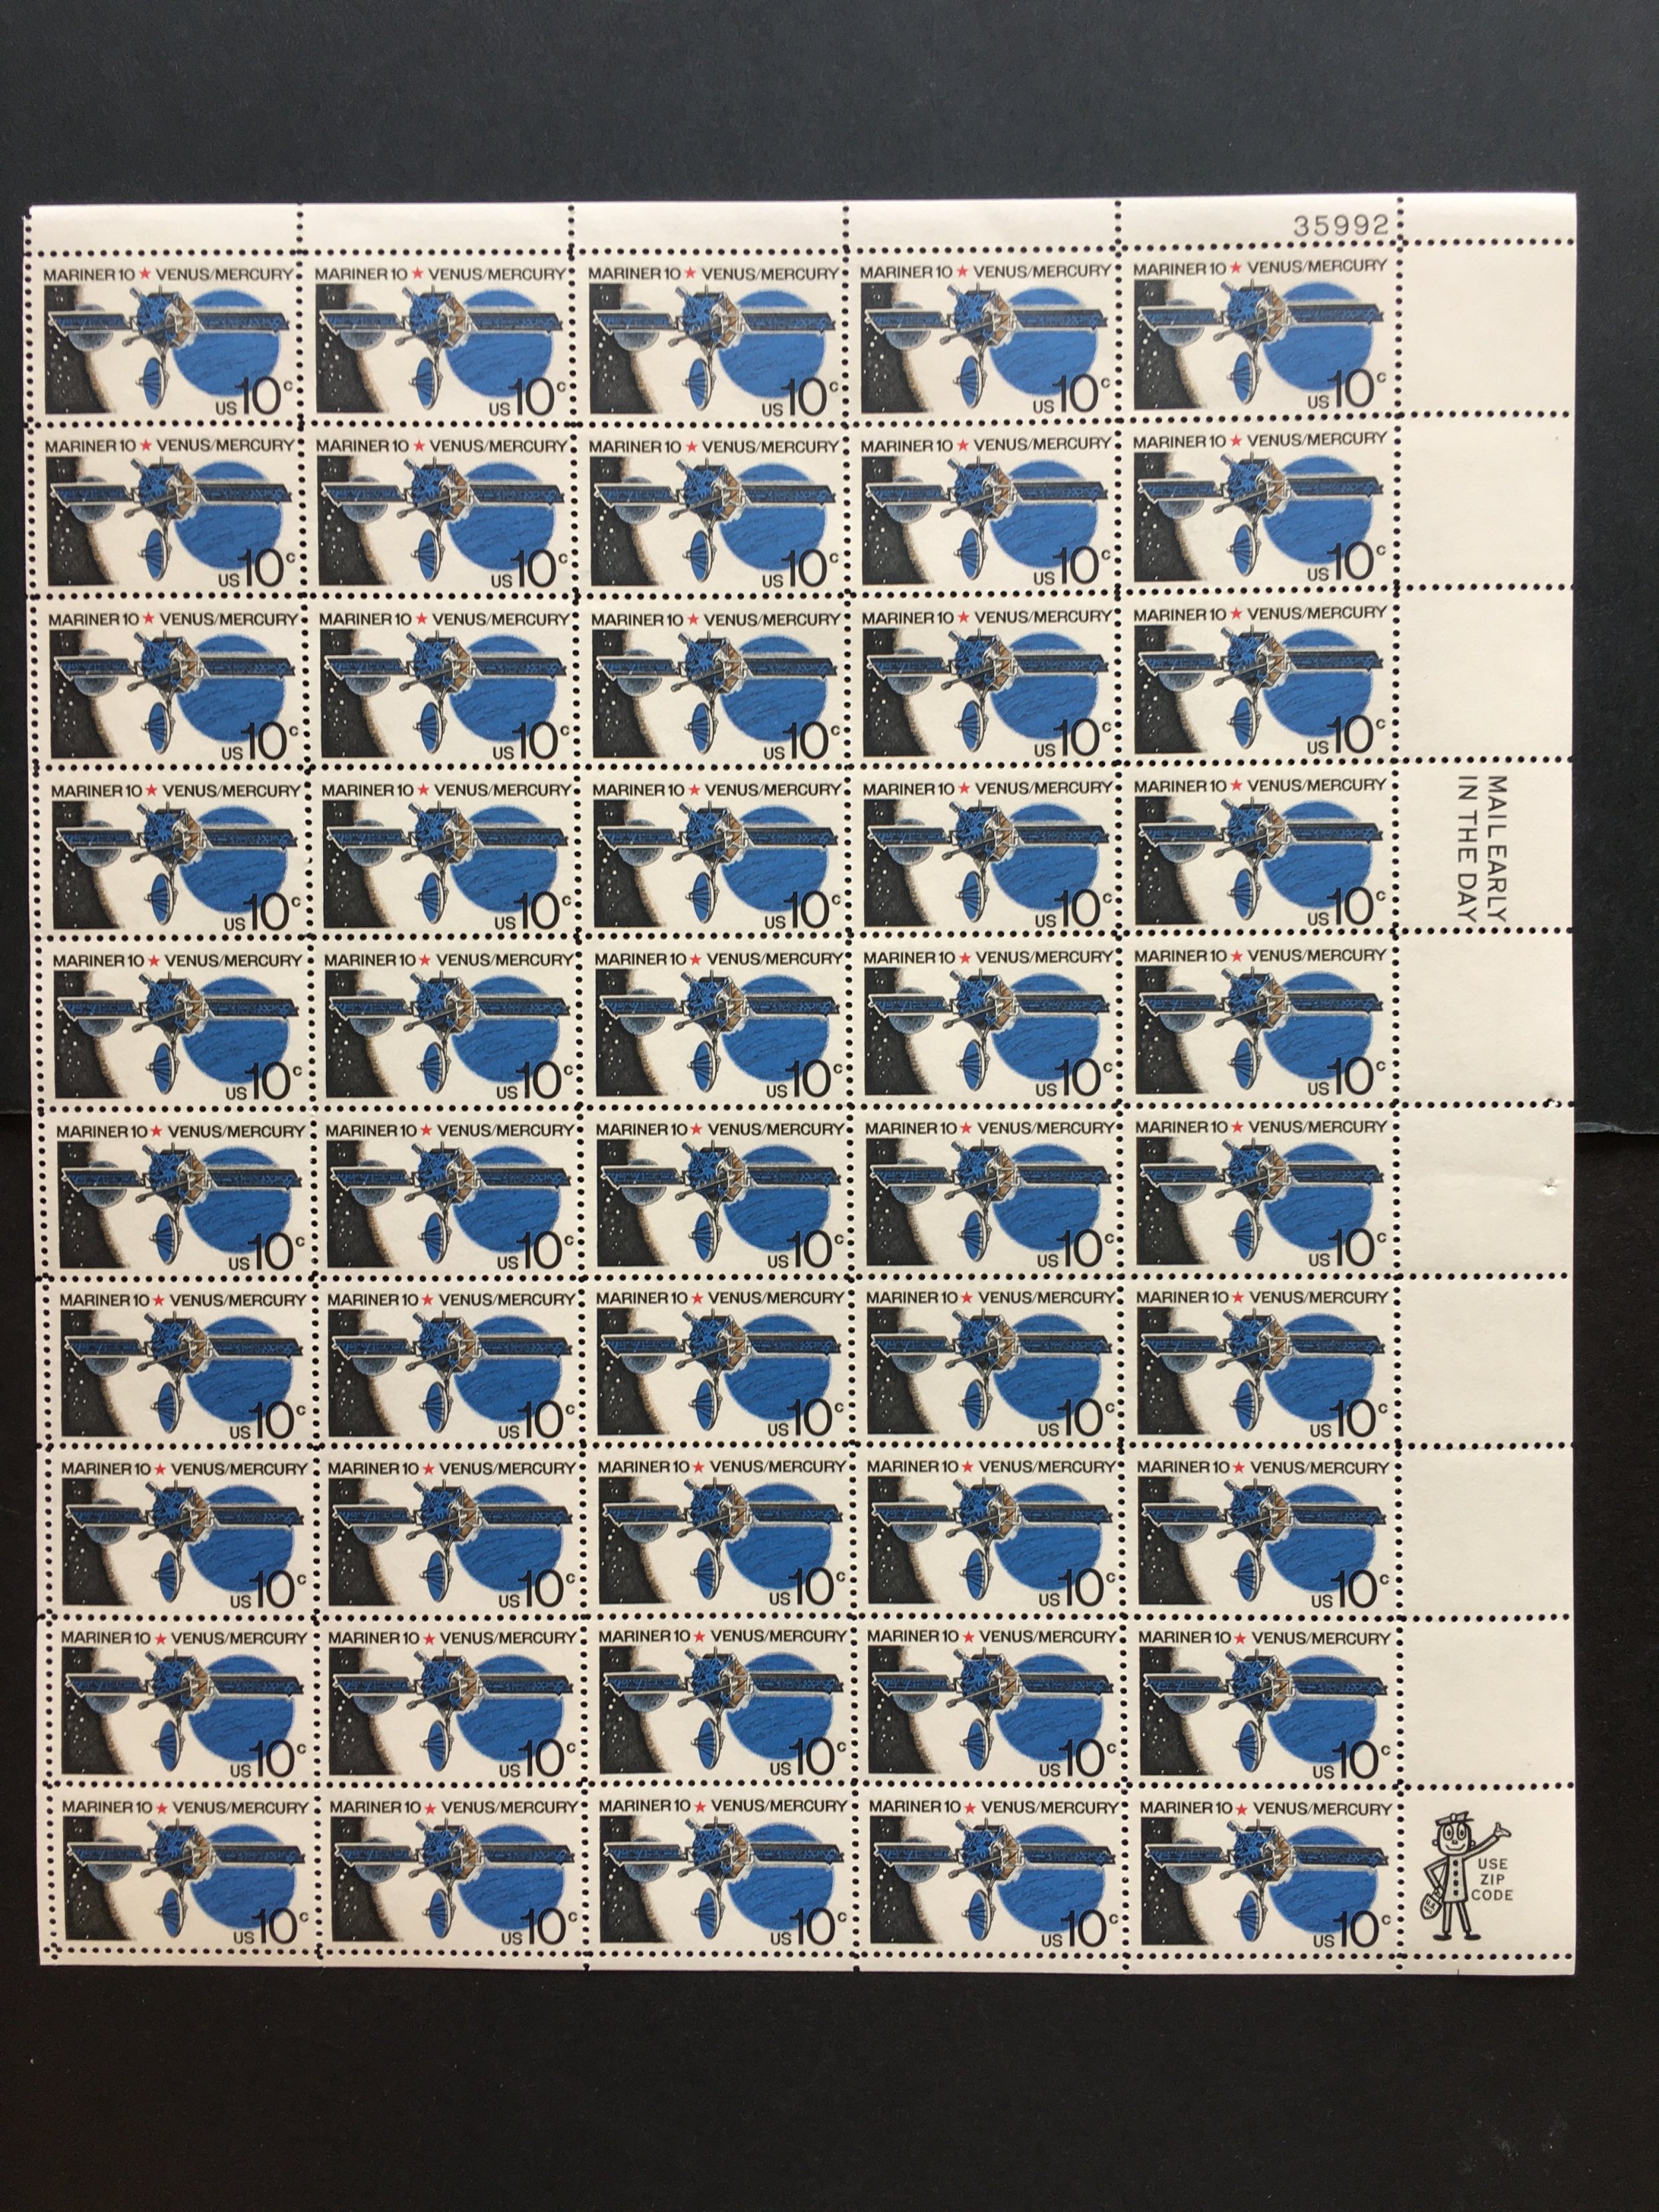 1975 sheet of stamps, Mariner 10, Scott # 1557 / HipStamp